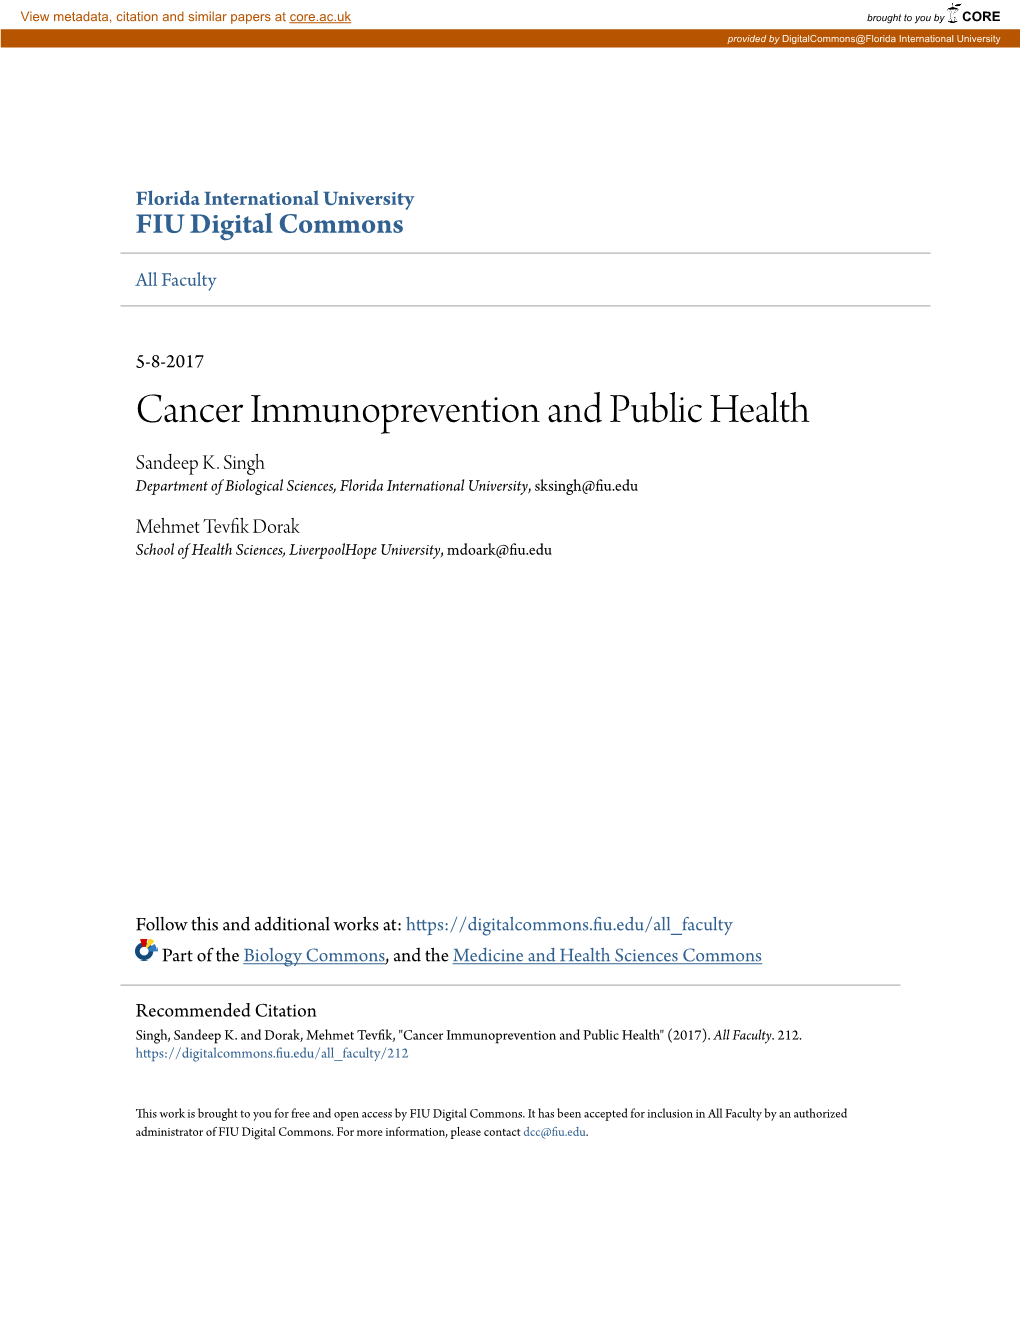 Cancer Immunoprevention and Public Health Sandeep K